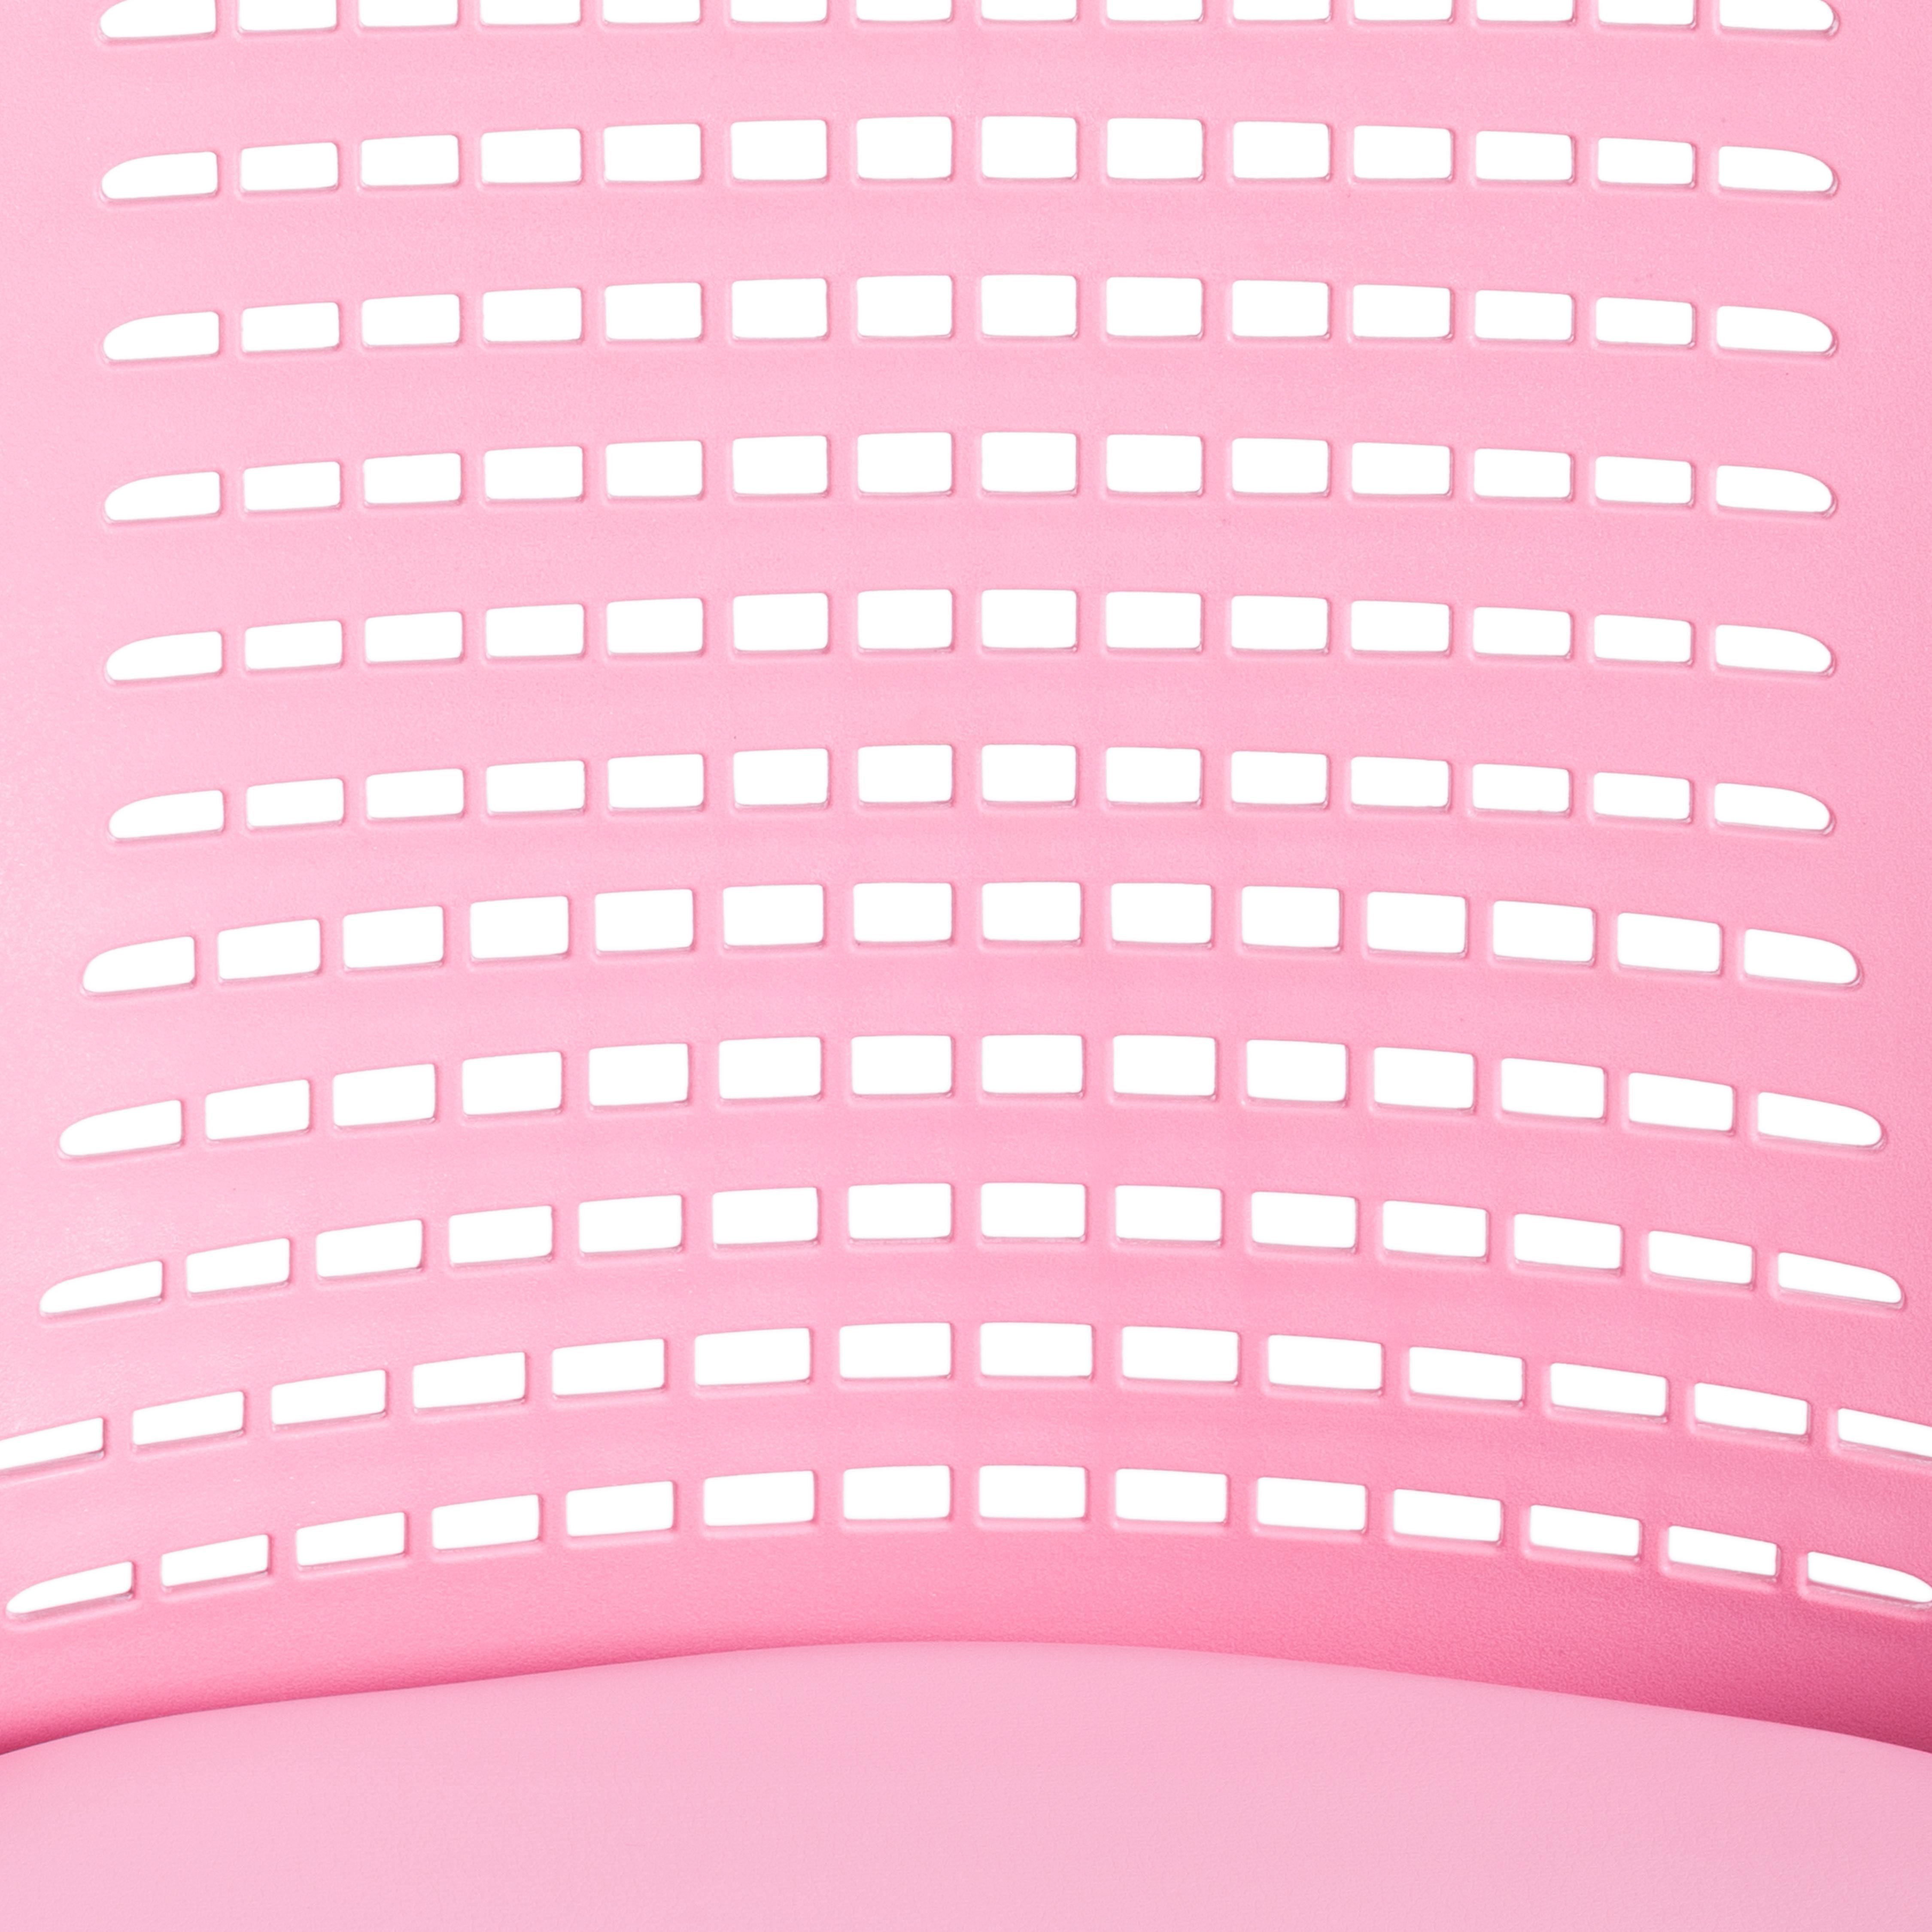 Кресло Kiddy кож/зам, розовый